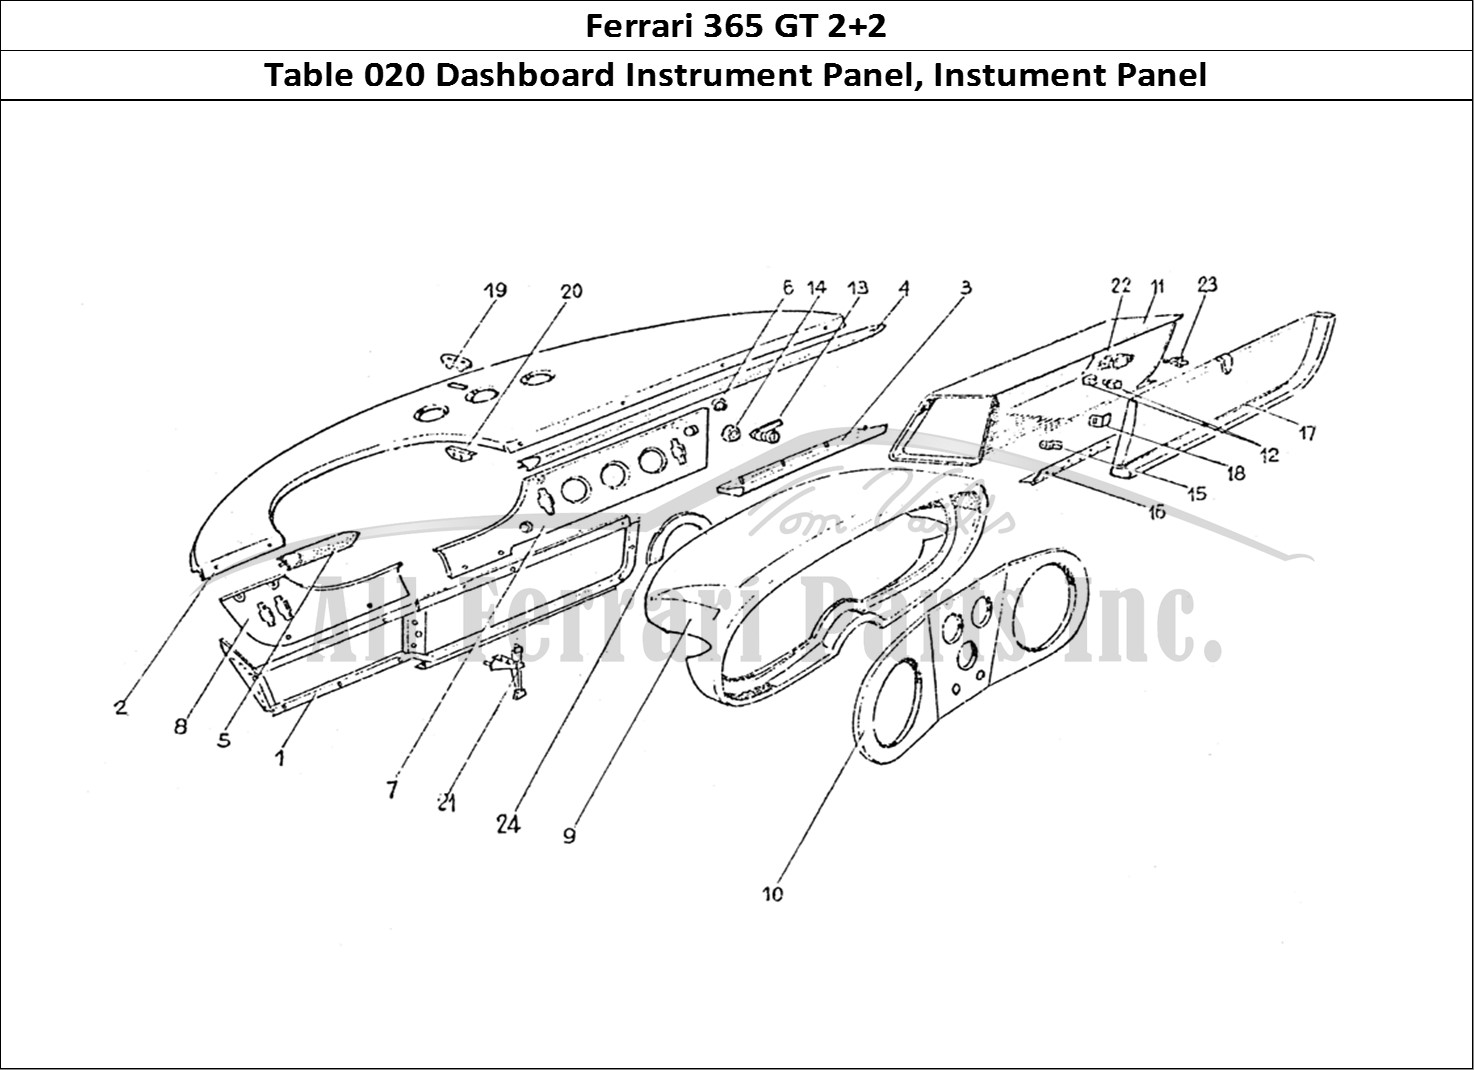 Ferrari Parts Ferrari 365 GT 2+2 (Coachwork) Page 020 Dash board